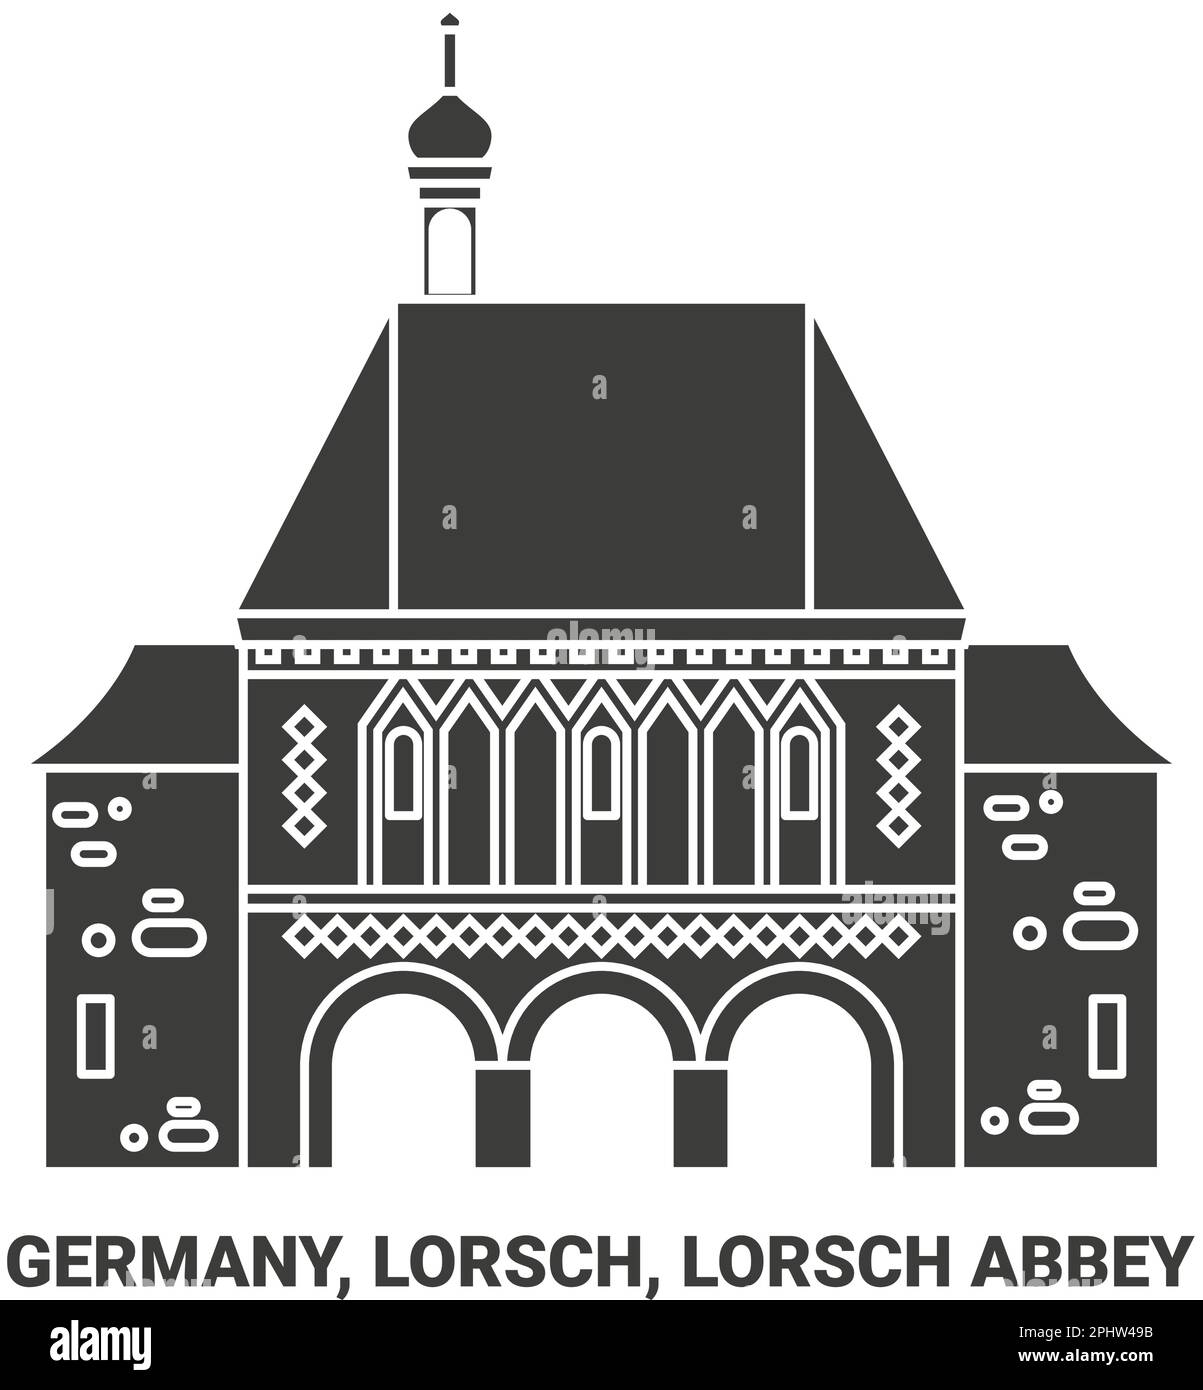 Germany, Lorsch, Lorsch Abbey travel landmark vector illustration Stock Vector